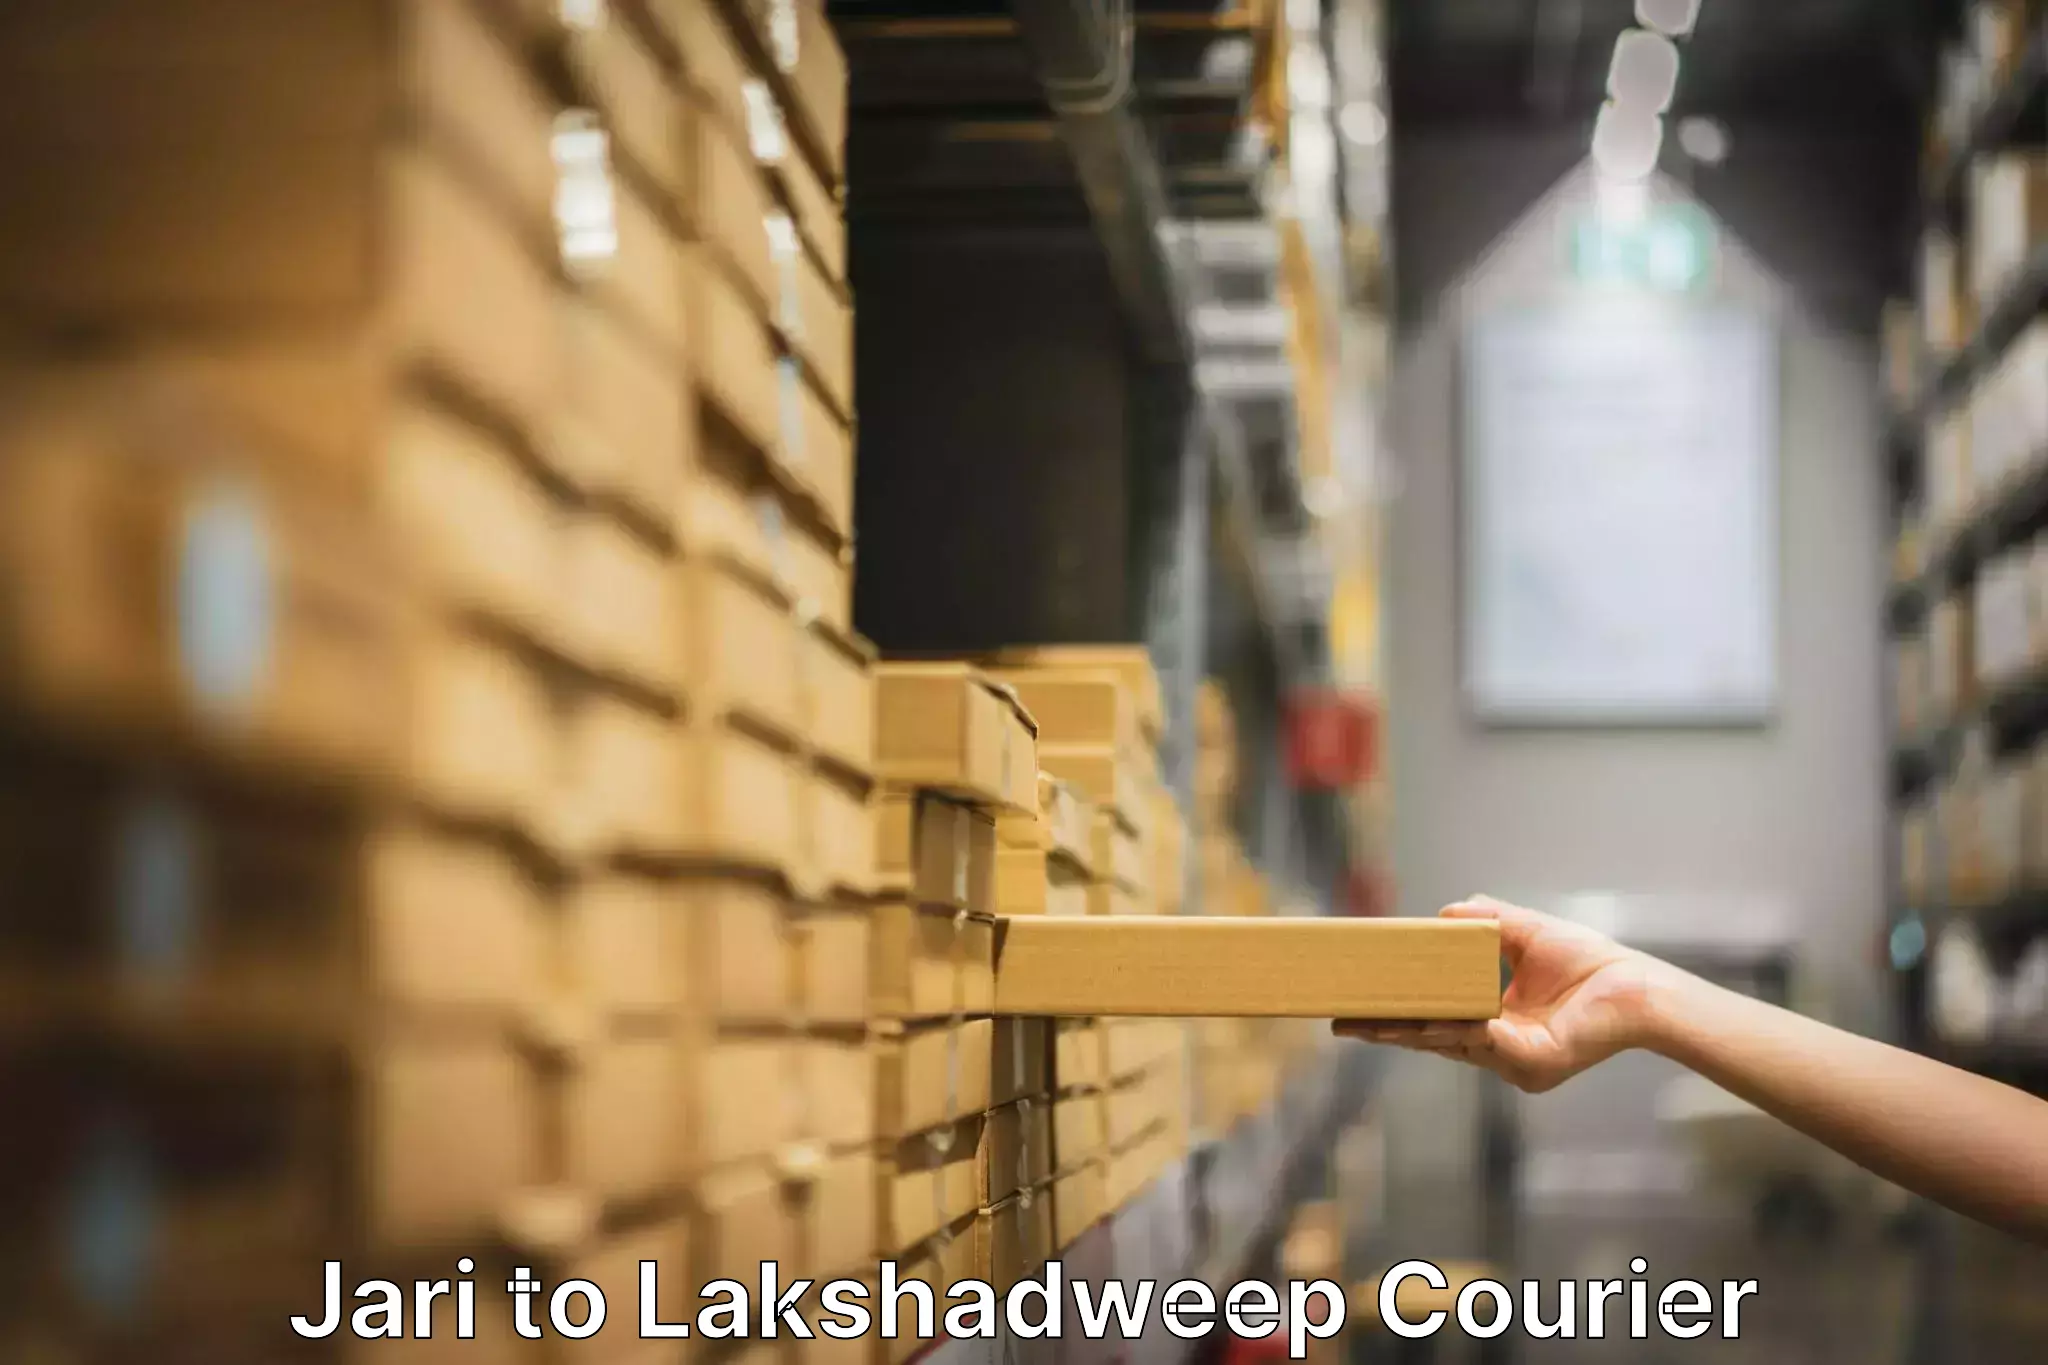 Professional moving company Jari to Lakshadweep